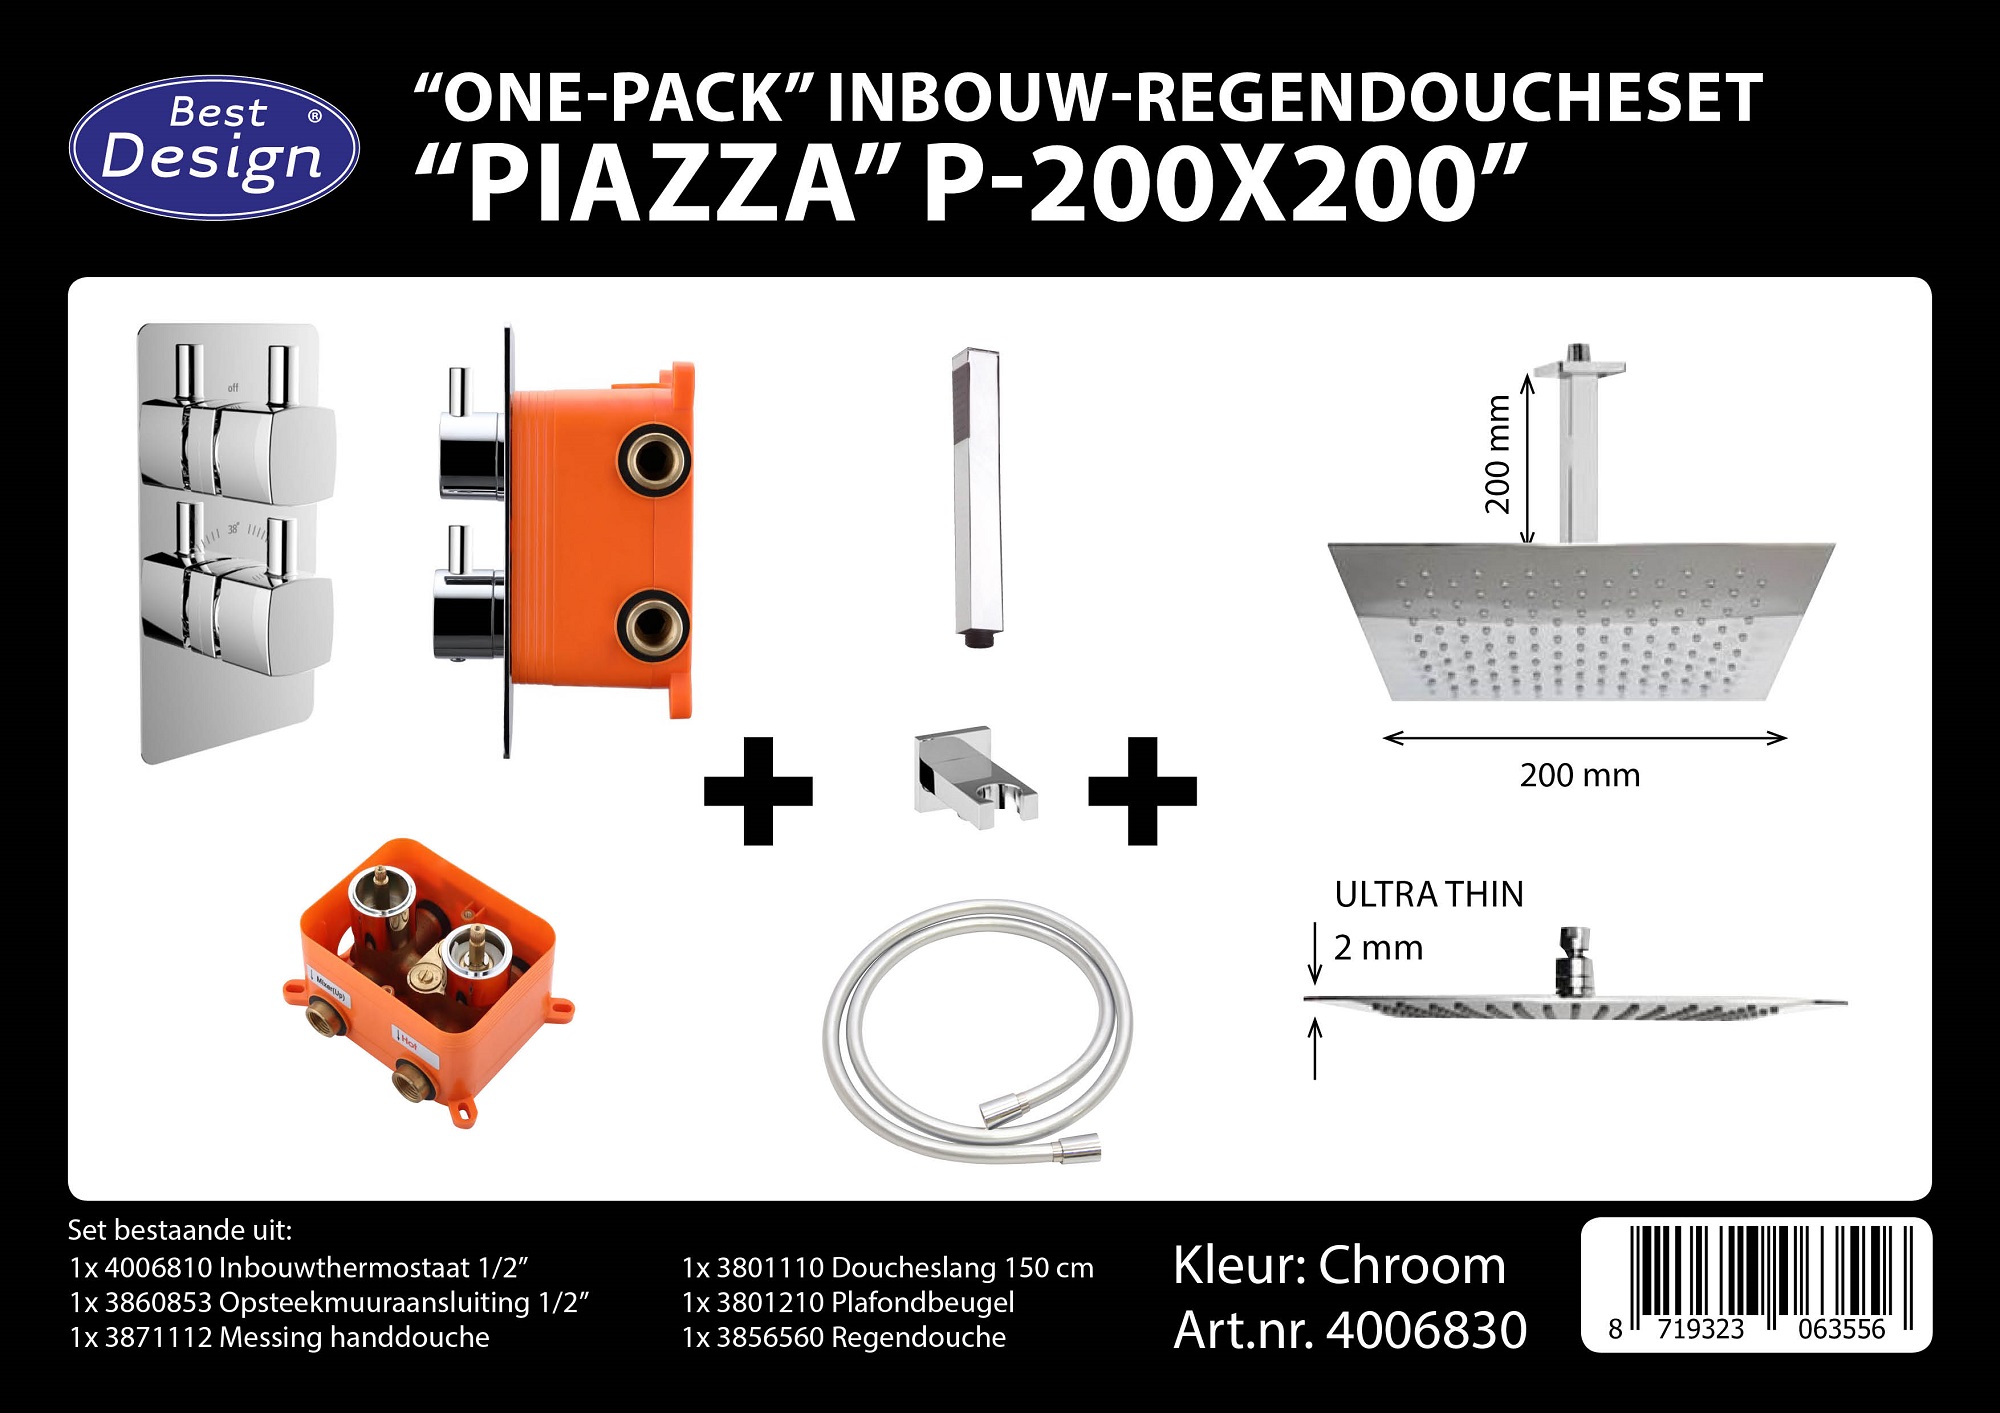 Best design one pack inbouw regendoucheset inb.box piazza vierkant p 200x200